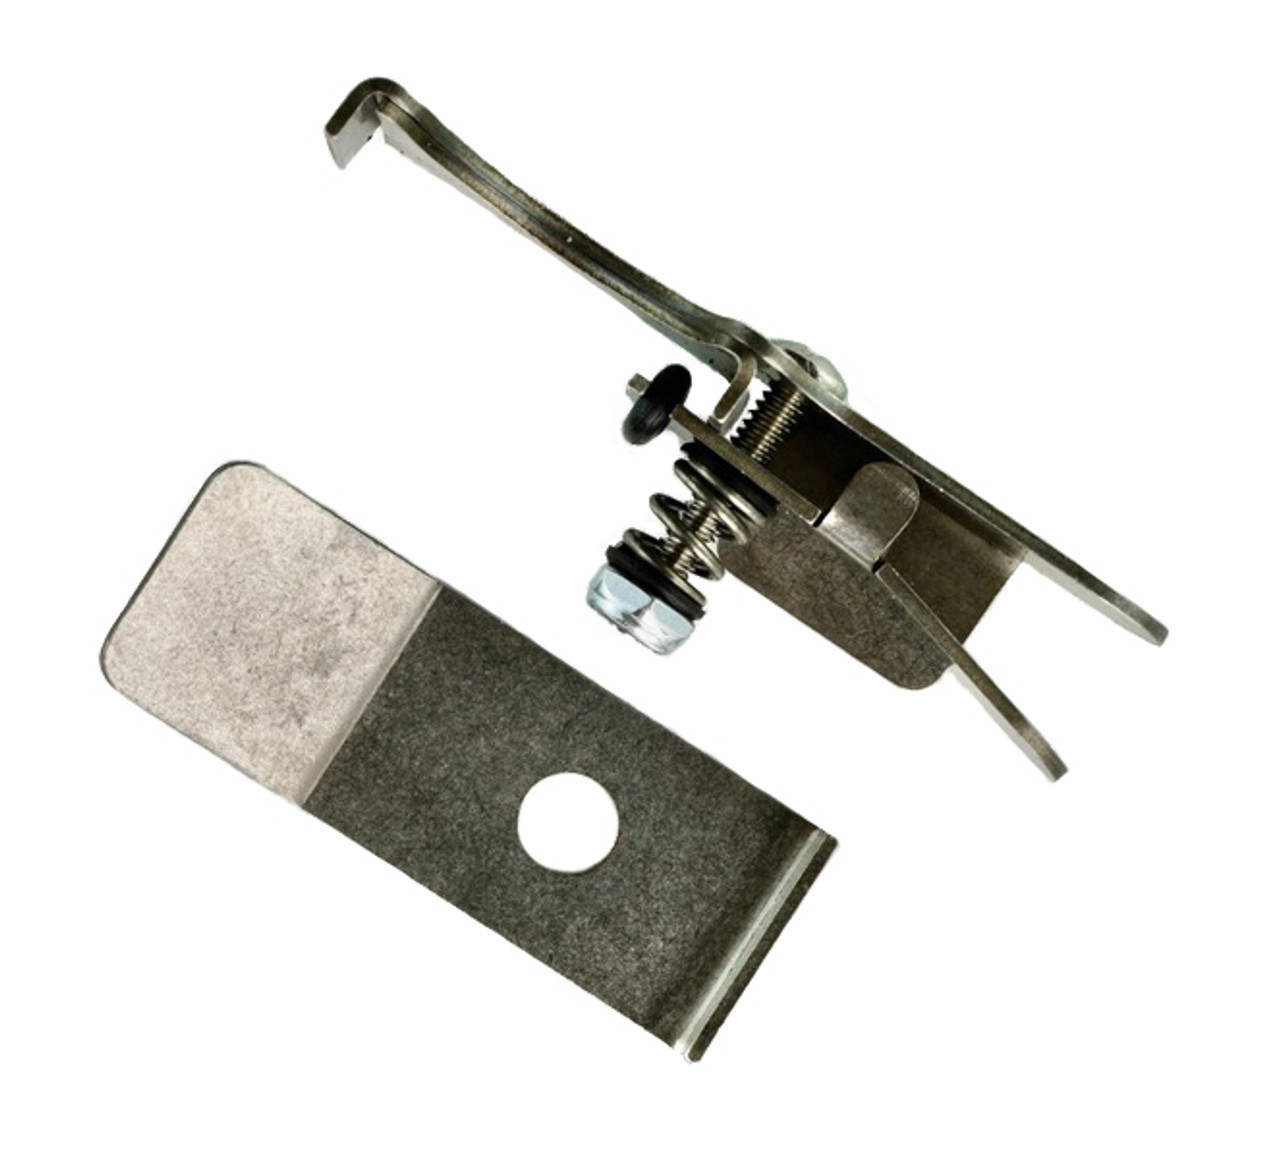 KME Precision Knife Sharpening System, Diamond Stone Kit, KF-D4